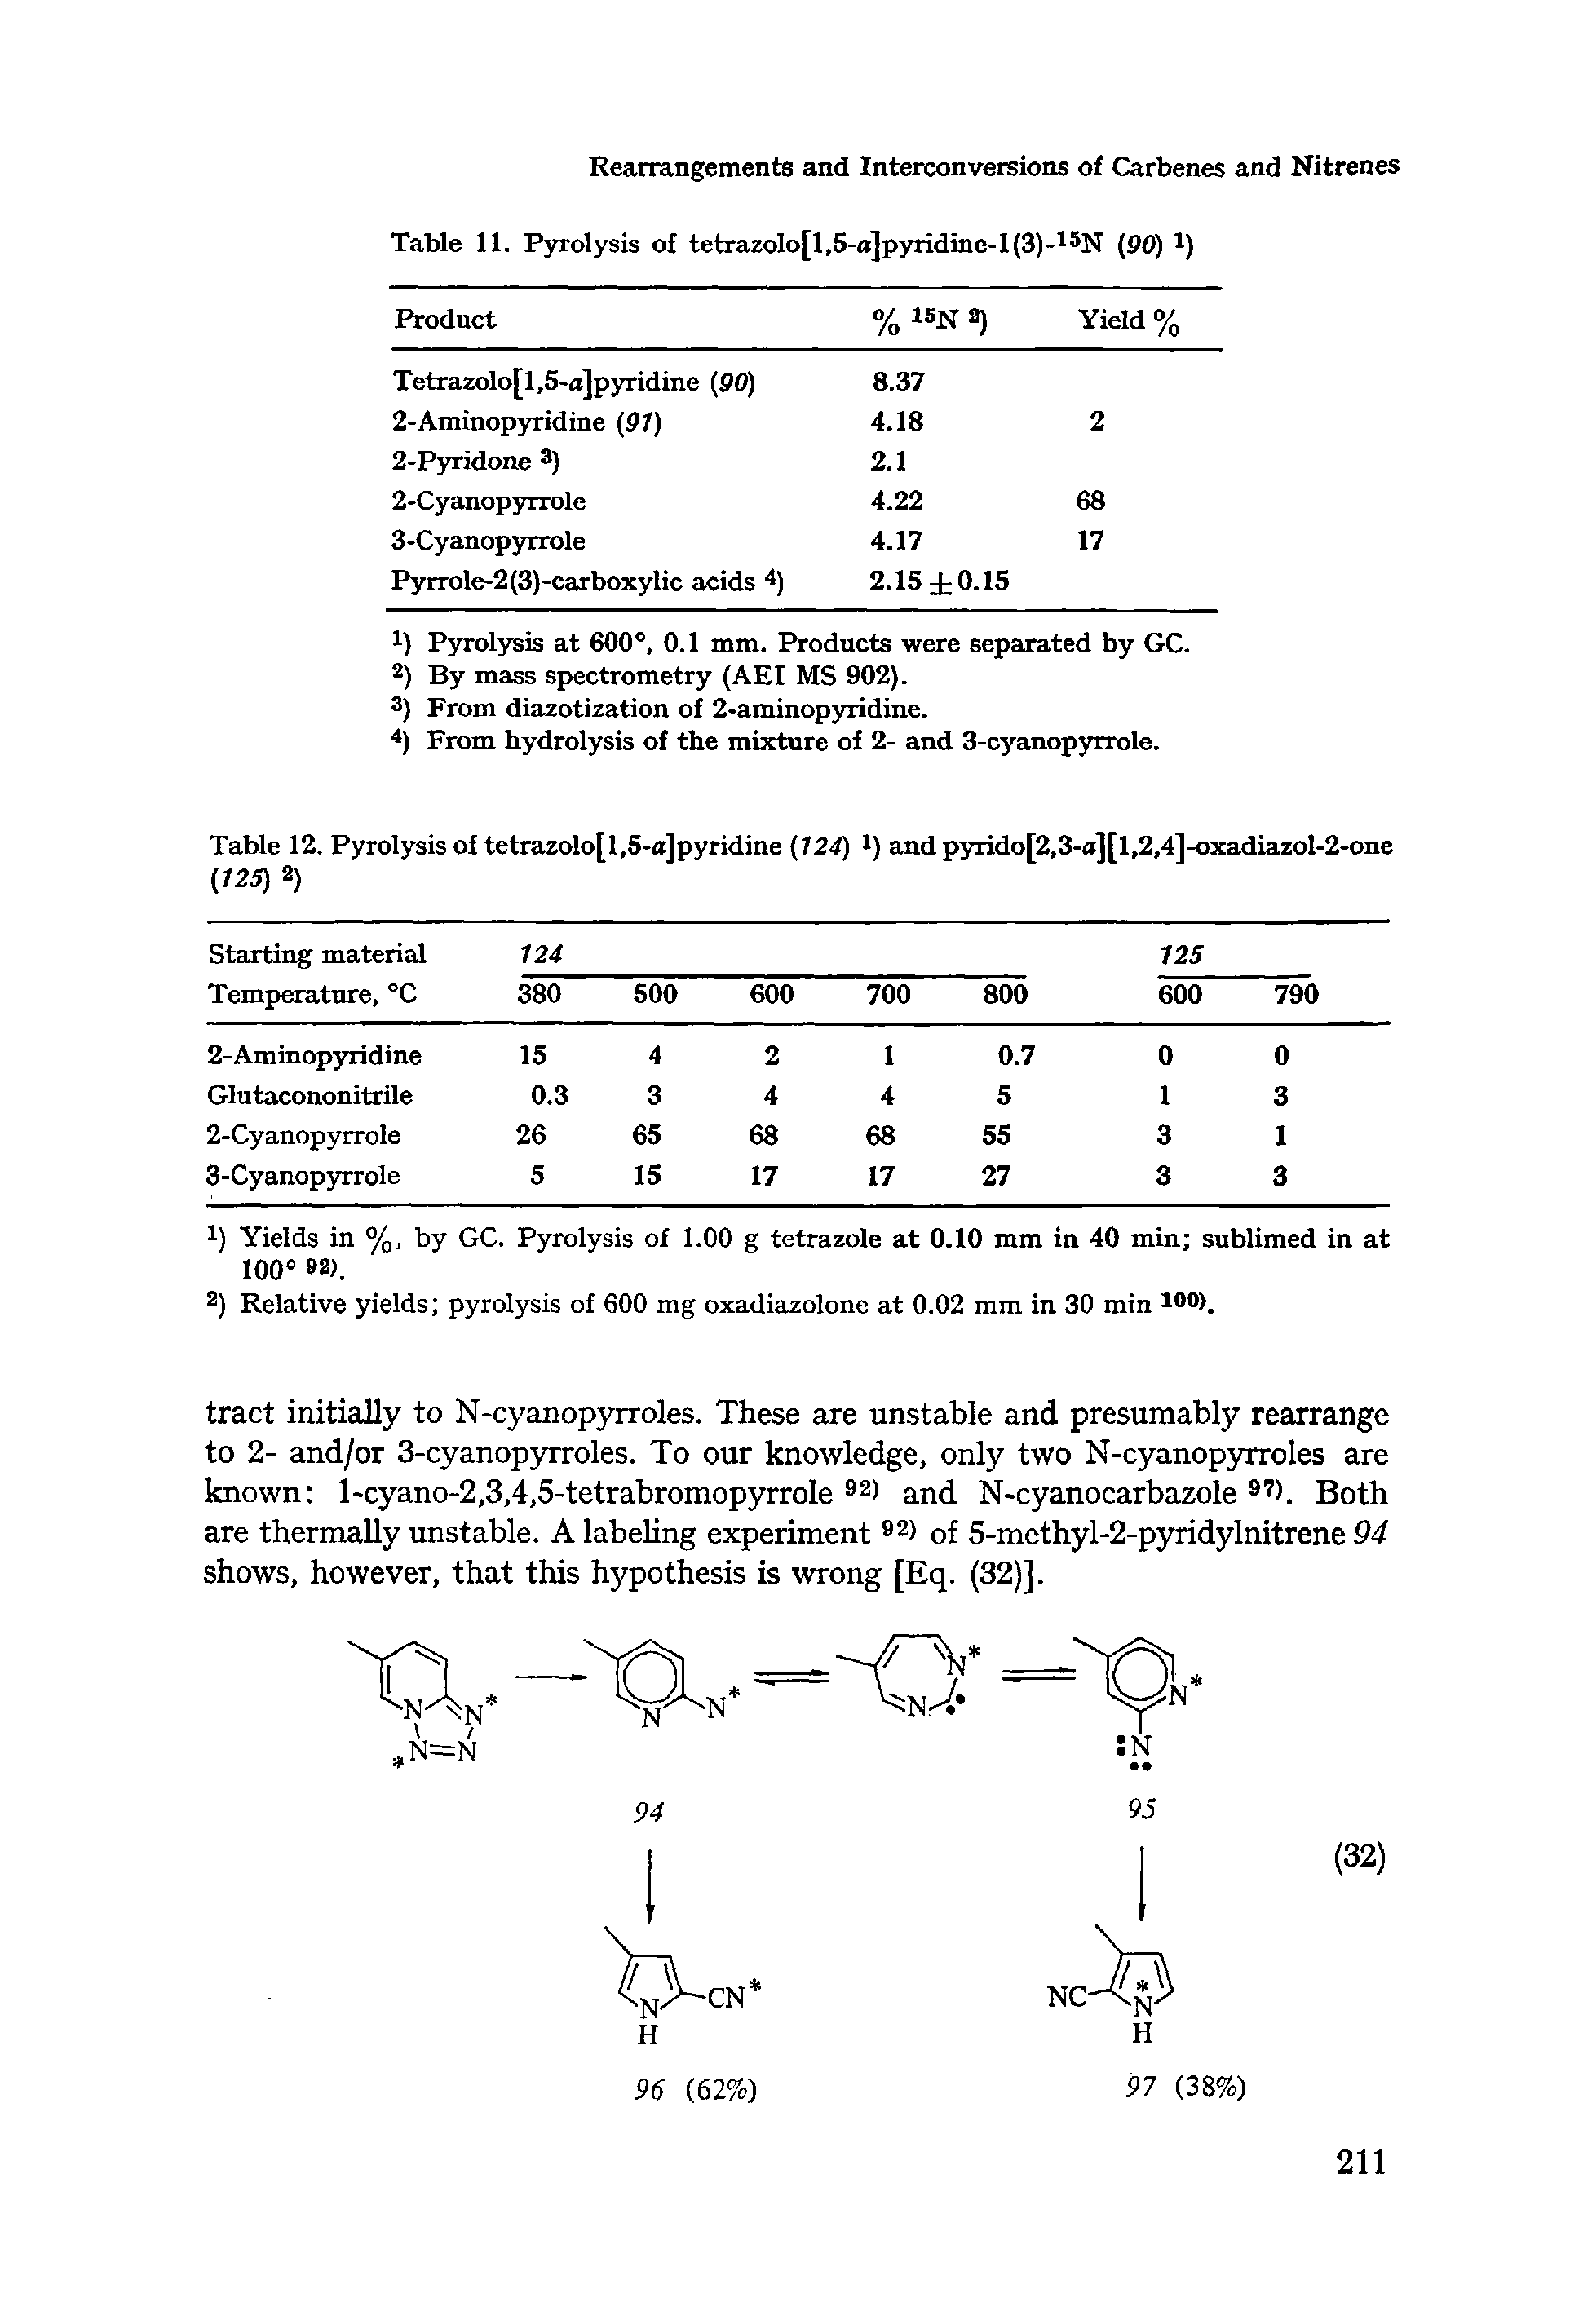 Table 12. Pyrolysis of tetrazolo[l,5-a]pyridine 124) i) and pyrido[2,3-o][l,2,4]-oxadiazol-2-one (f25) 2)...